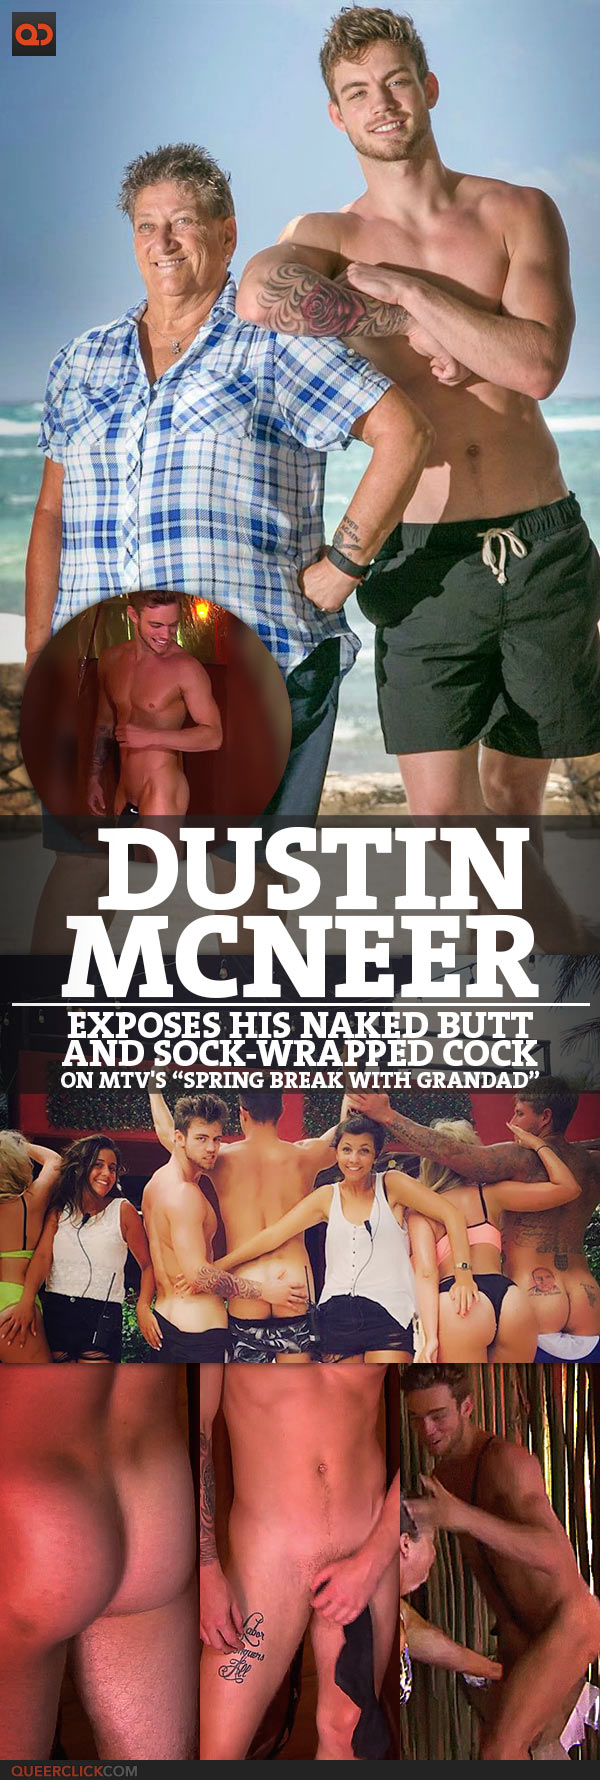 Dustin McNeer Nude - leaked pictures & videos | CelebrityGay